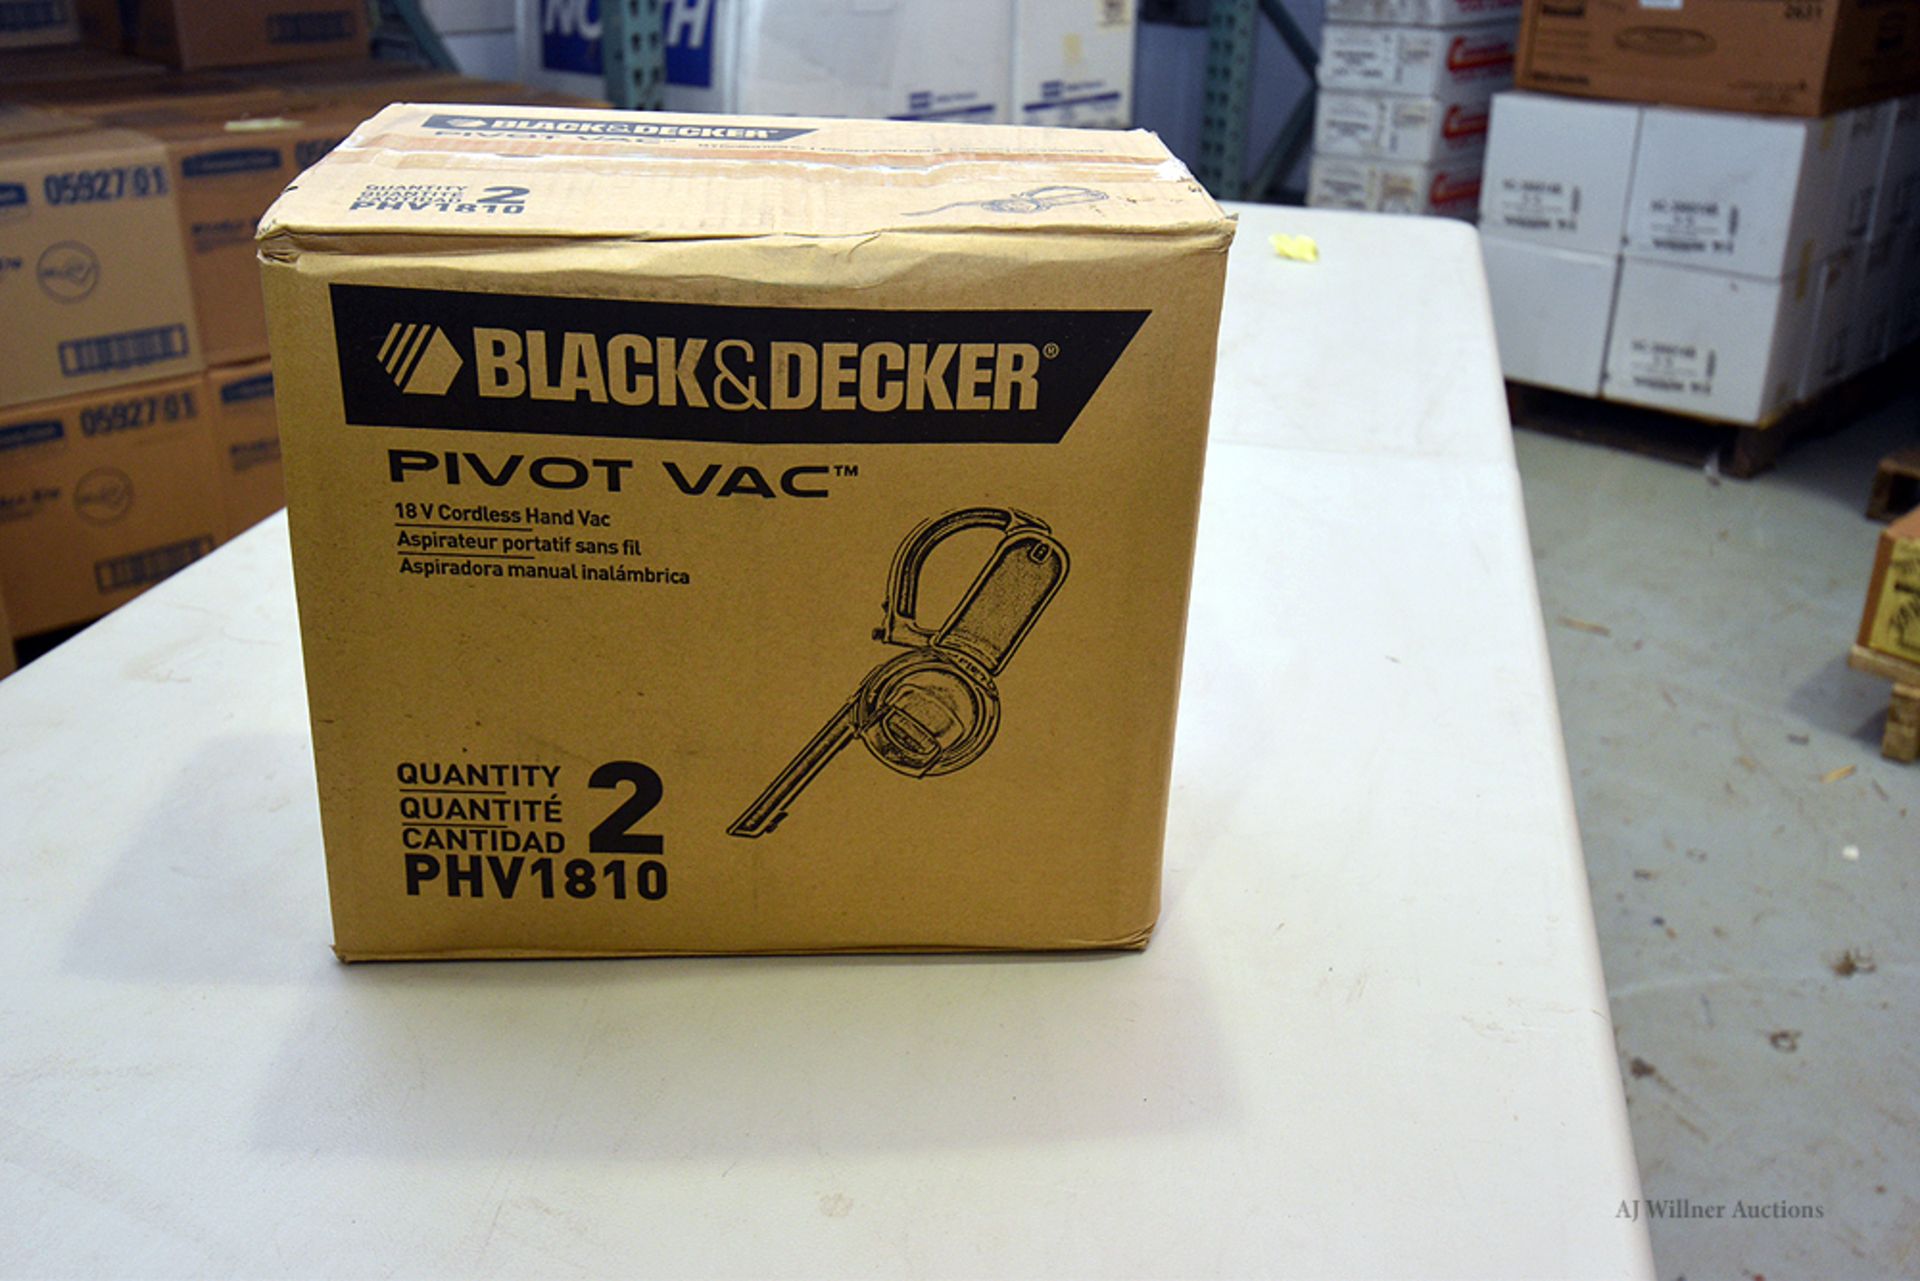 Black & Decker, "Pivot Vac", Model PHV1810 - Image 2 of 2